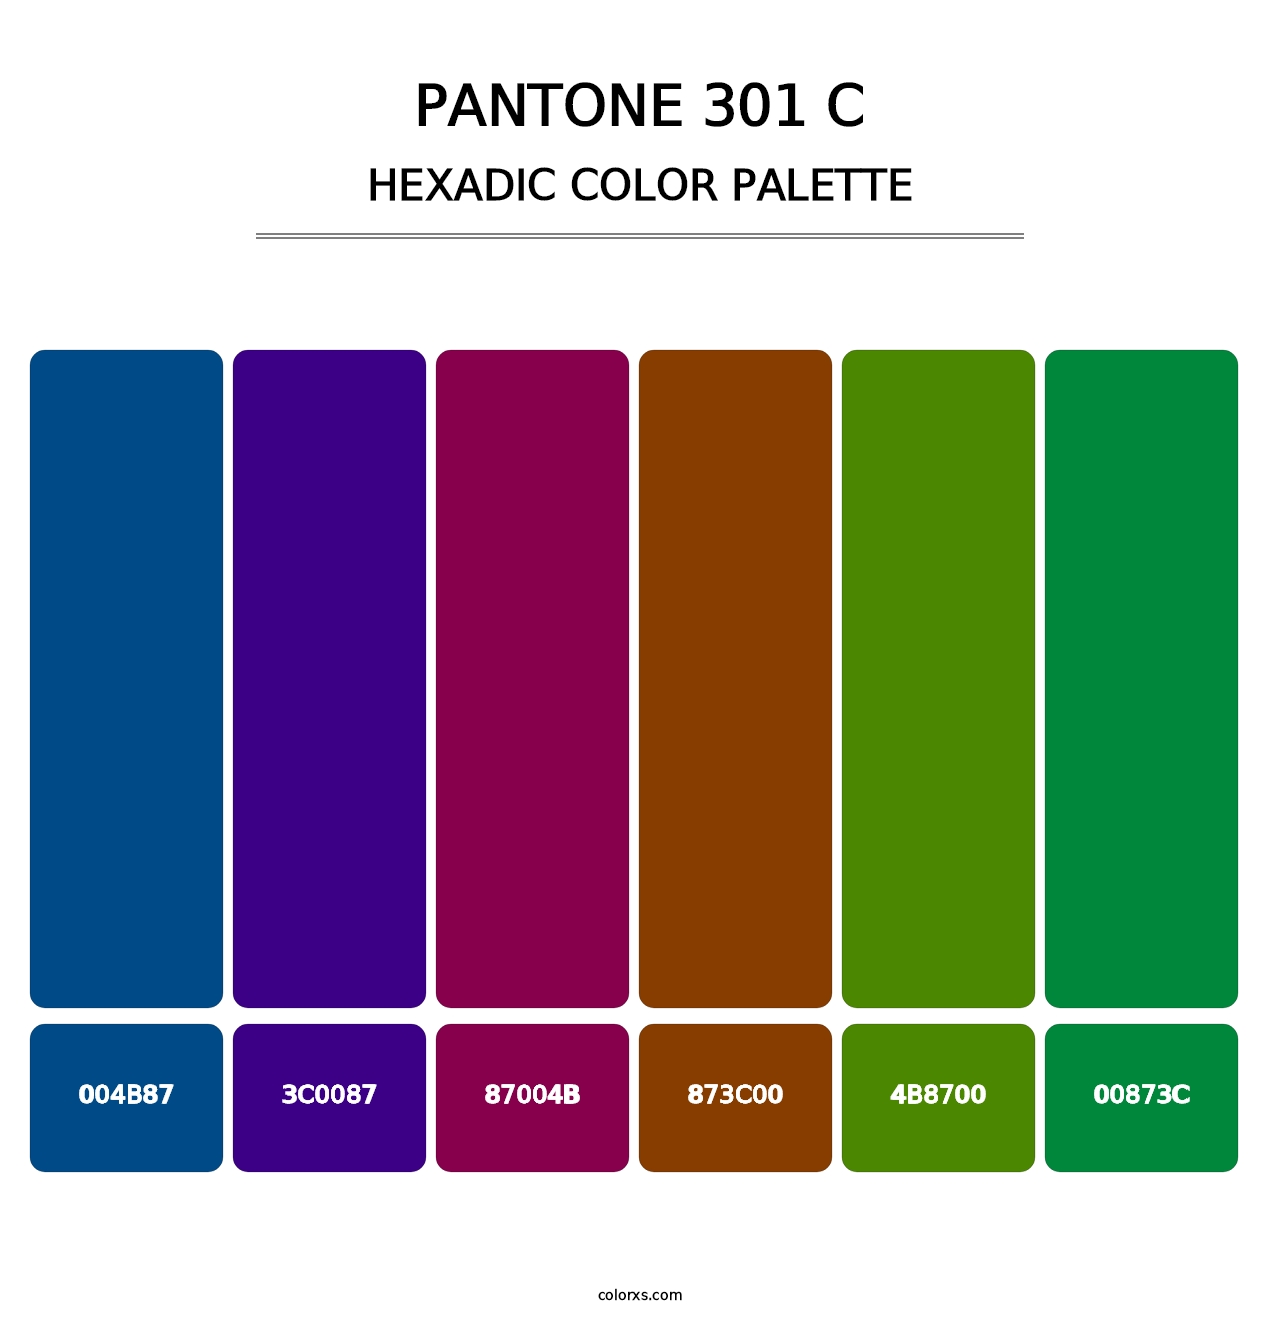 PANTONE 301 C - Hexadic Color Palette